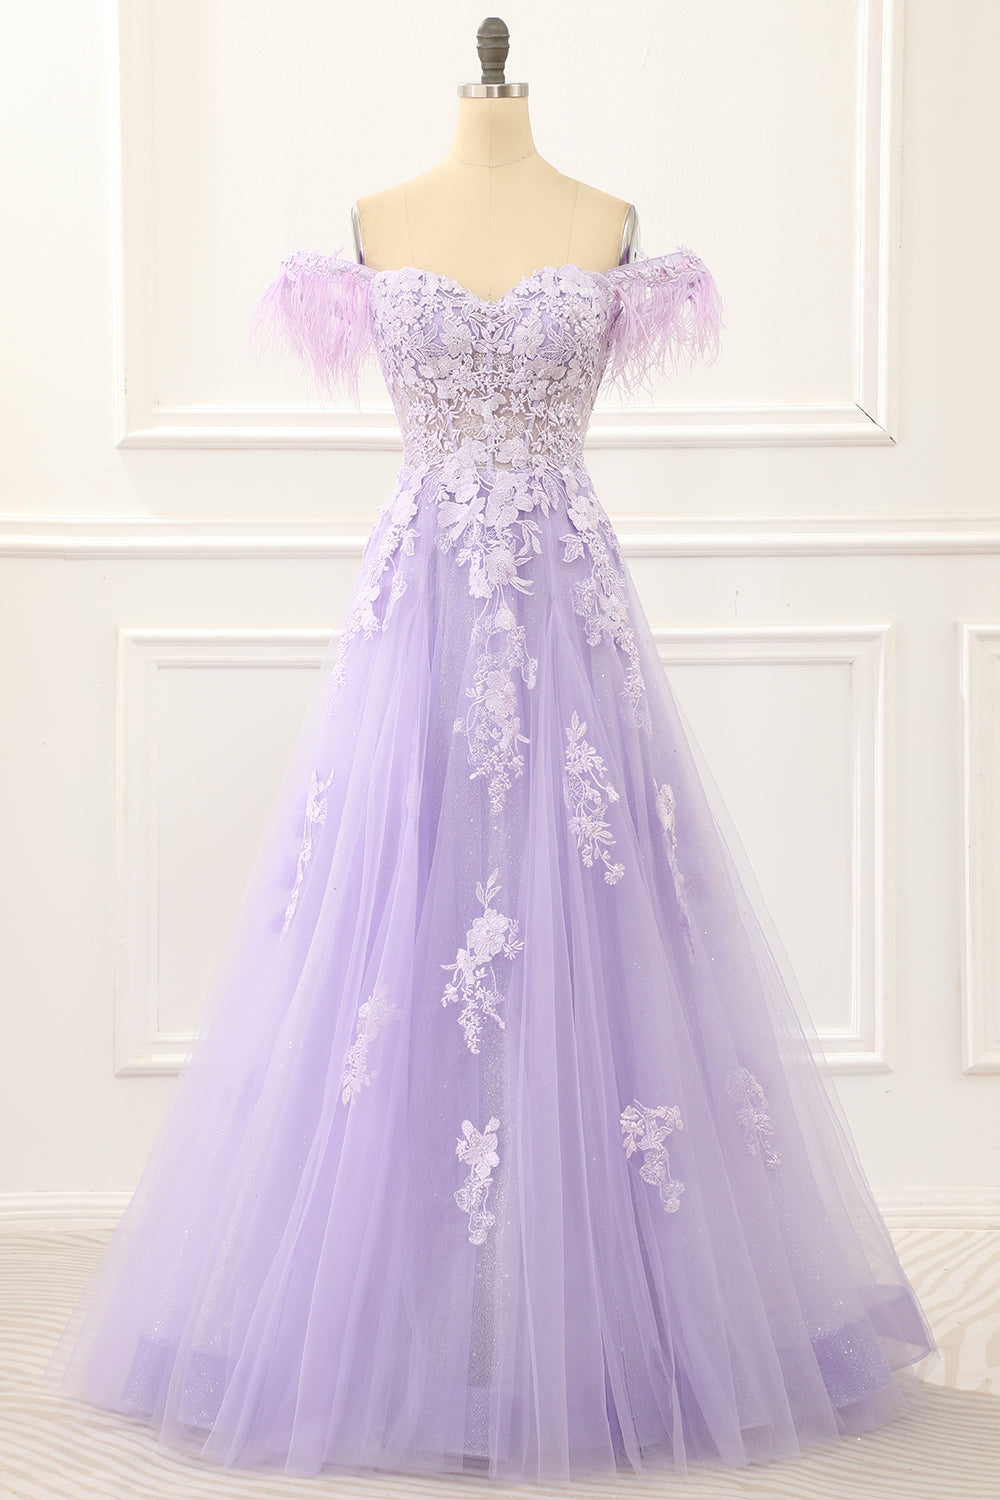 Bridesmaids Dress Purple, Lavender Off Shoulder Appliques Prom Dress with Feathers